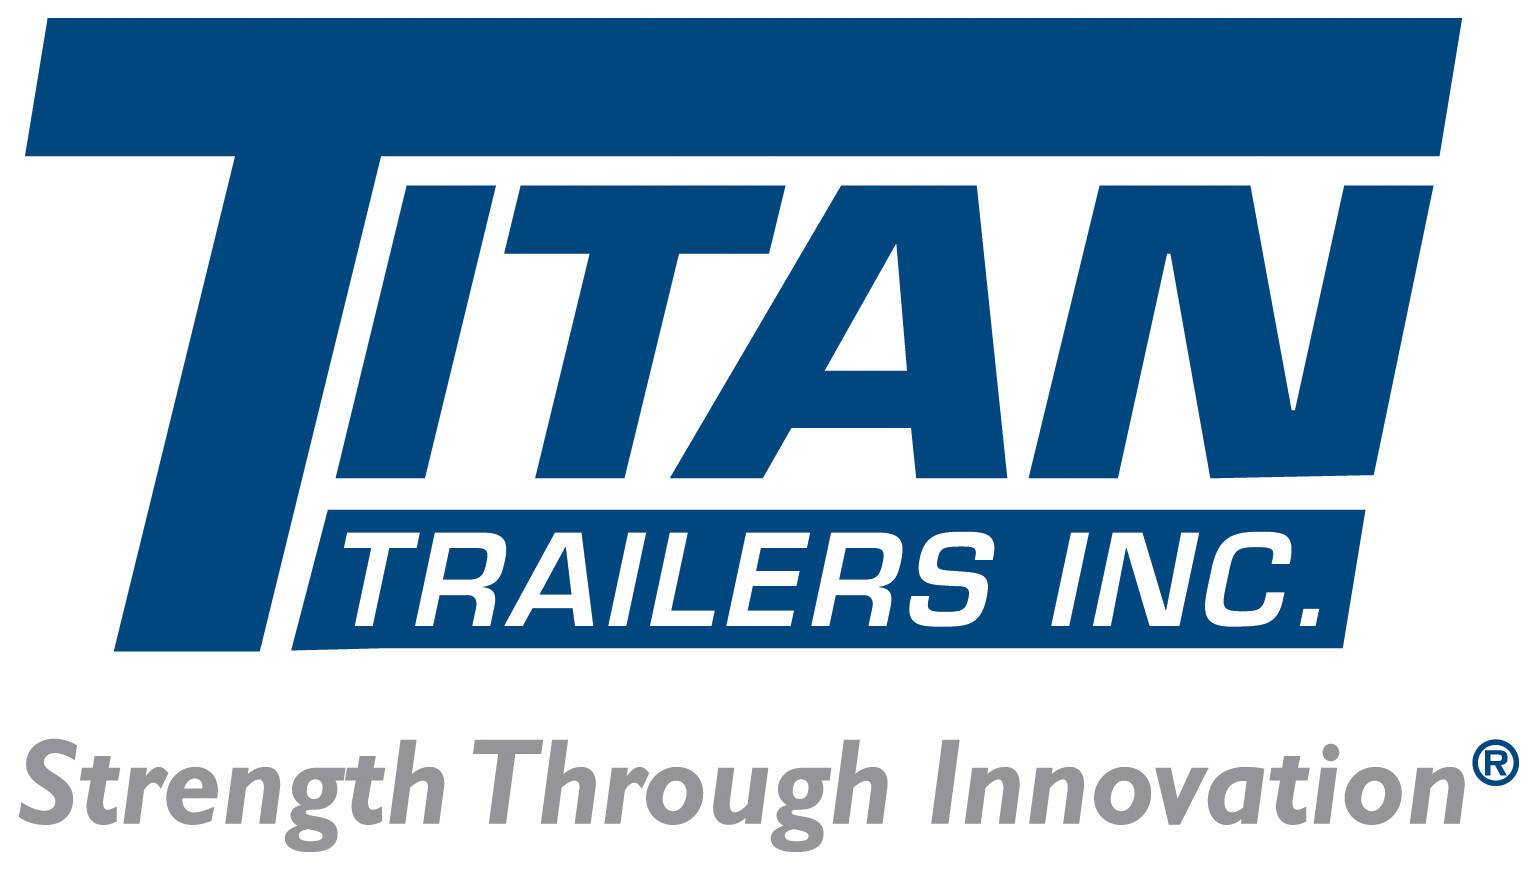 Titan Trailers